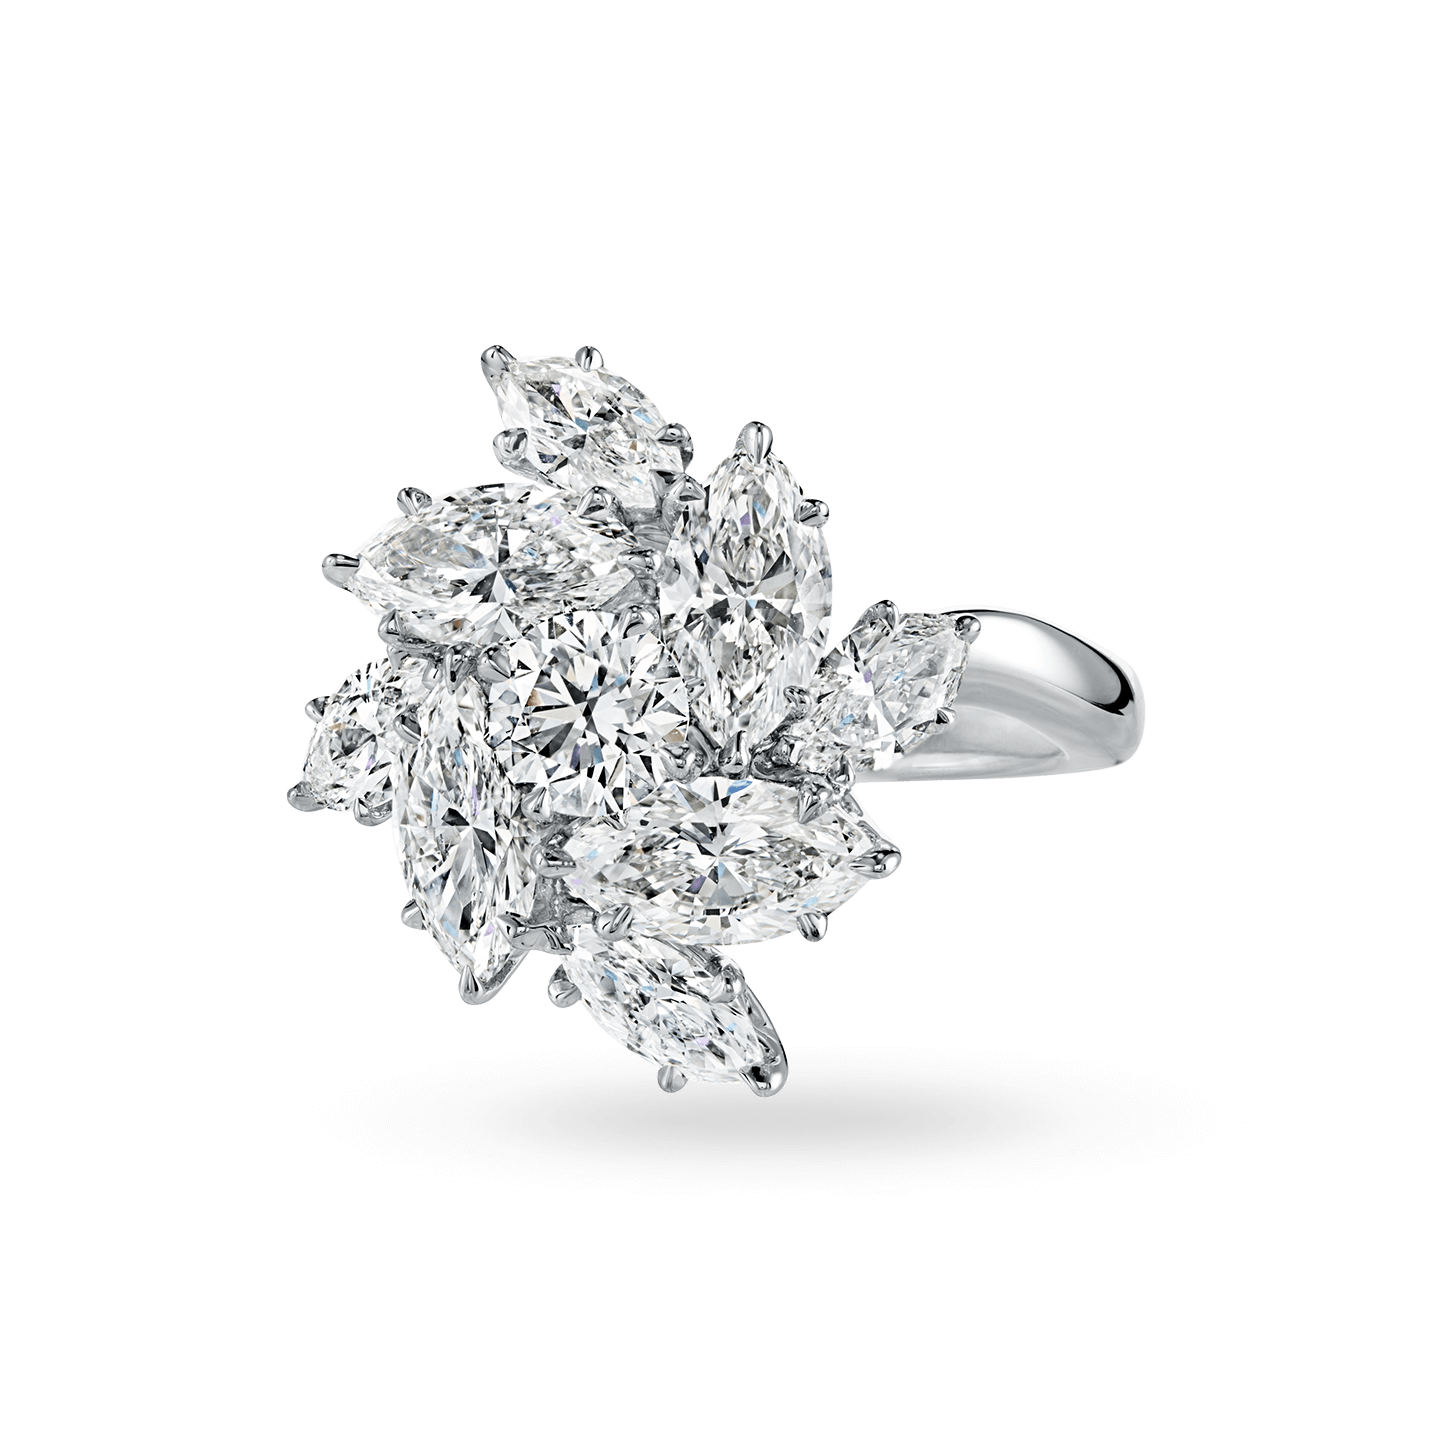 Pirouette Diamond Ring, Product Image 2